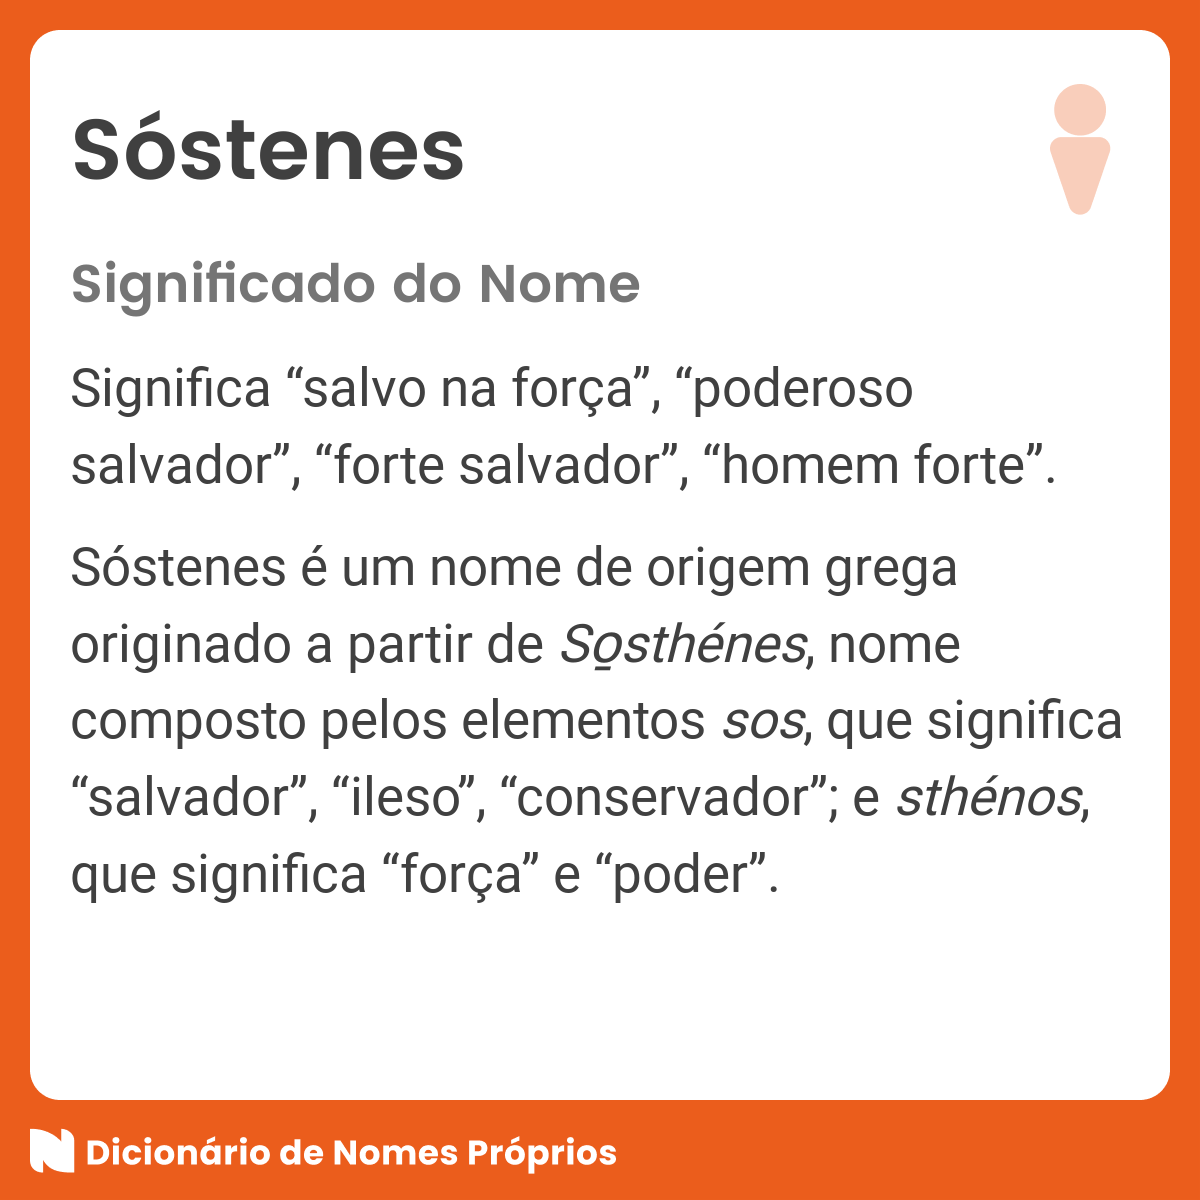 https://static.dicionariodenomesproprios.com.br/upload/facebook/s/sostenes-1x1.png